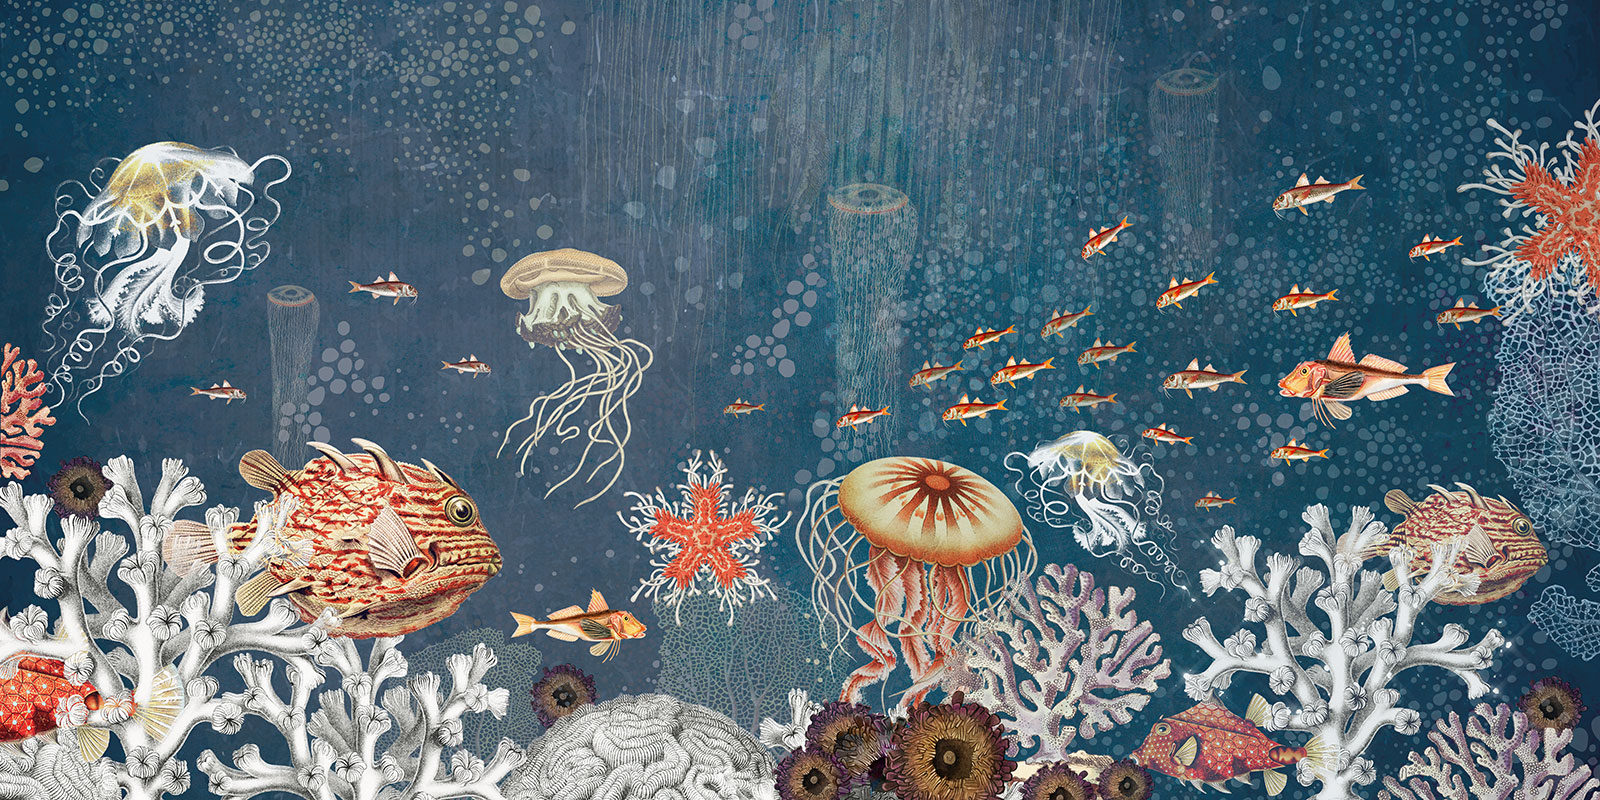 Dreamy Undersea